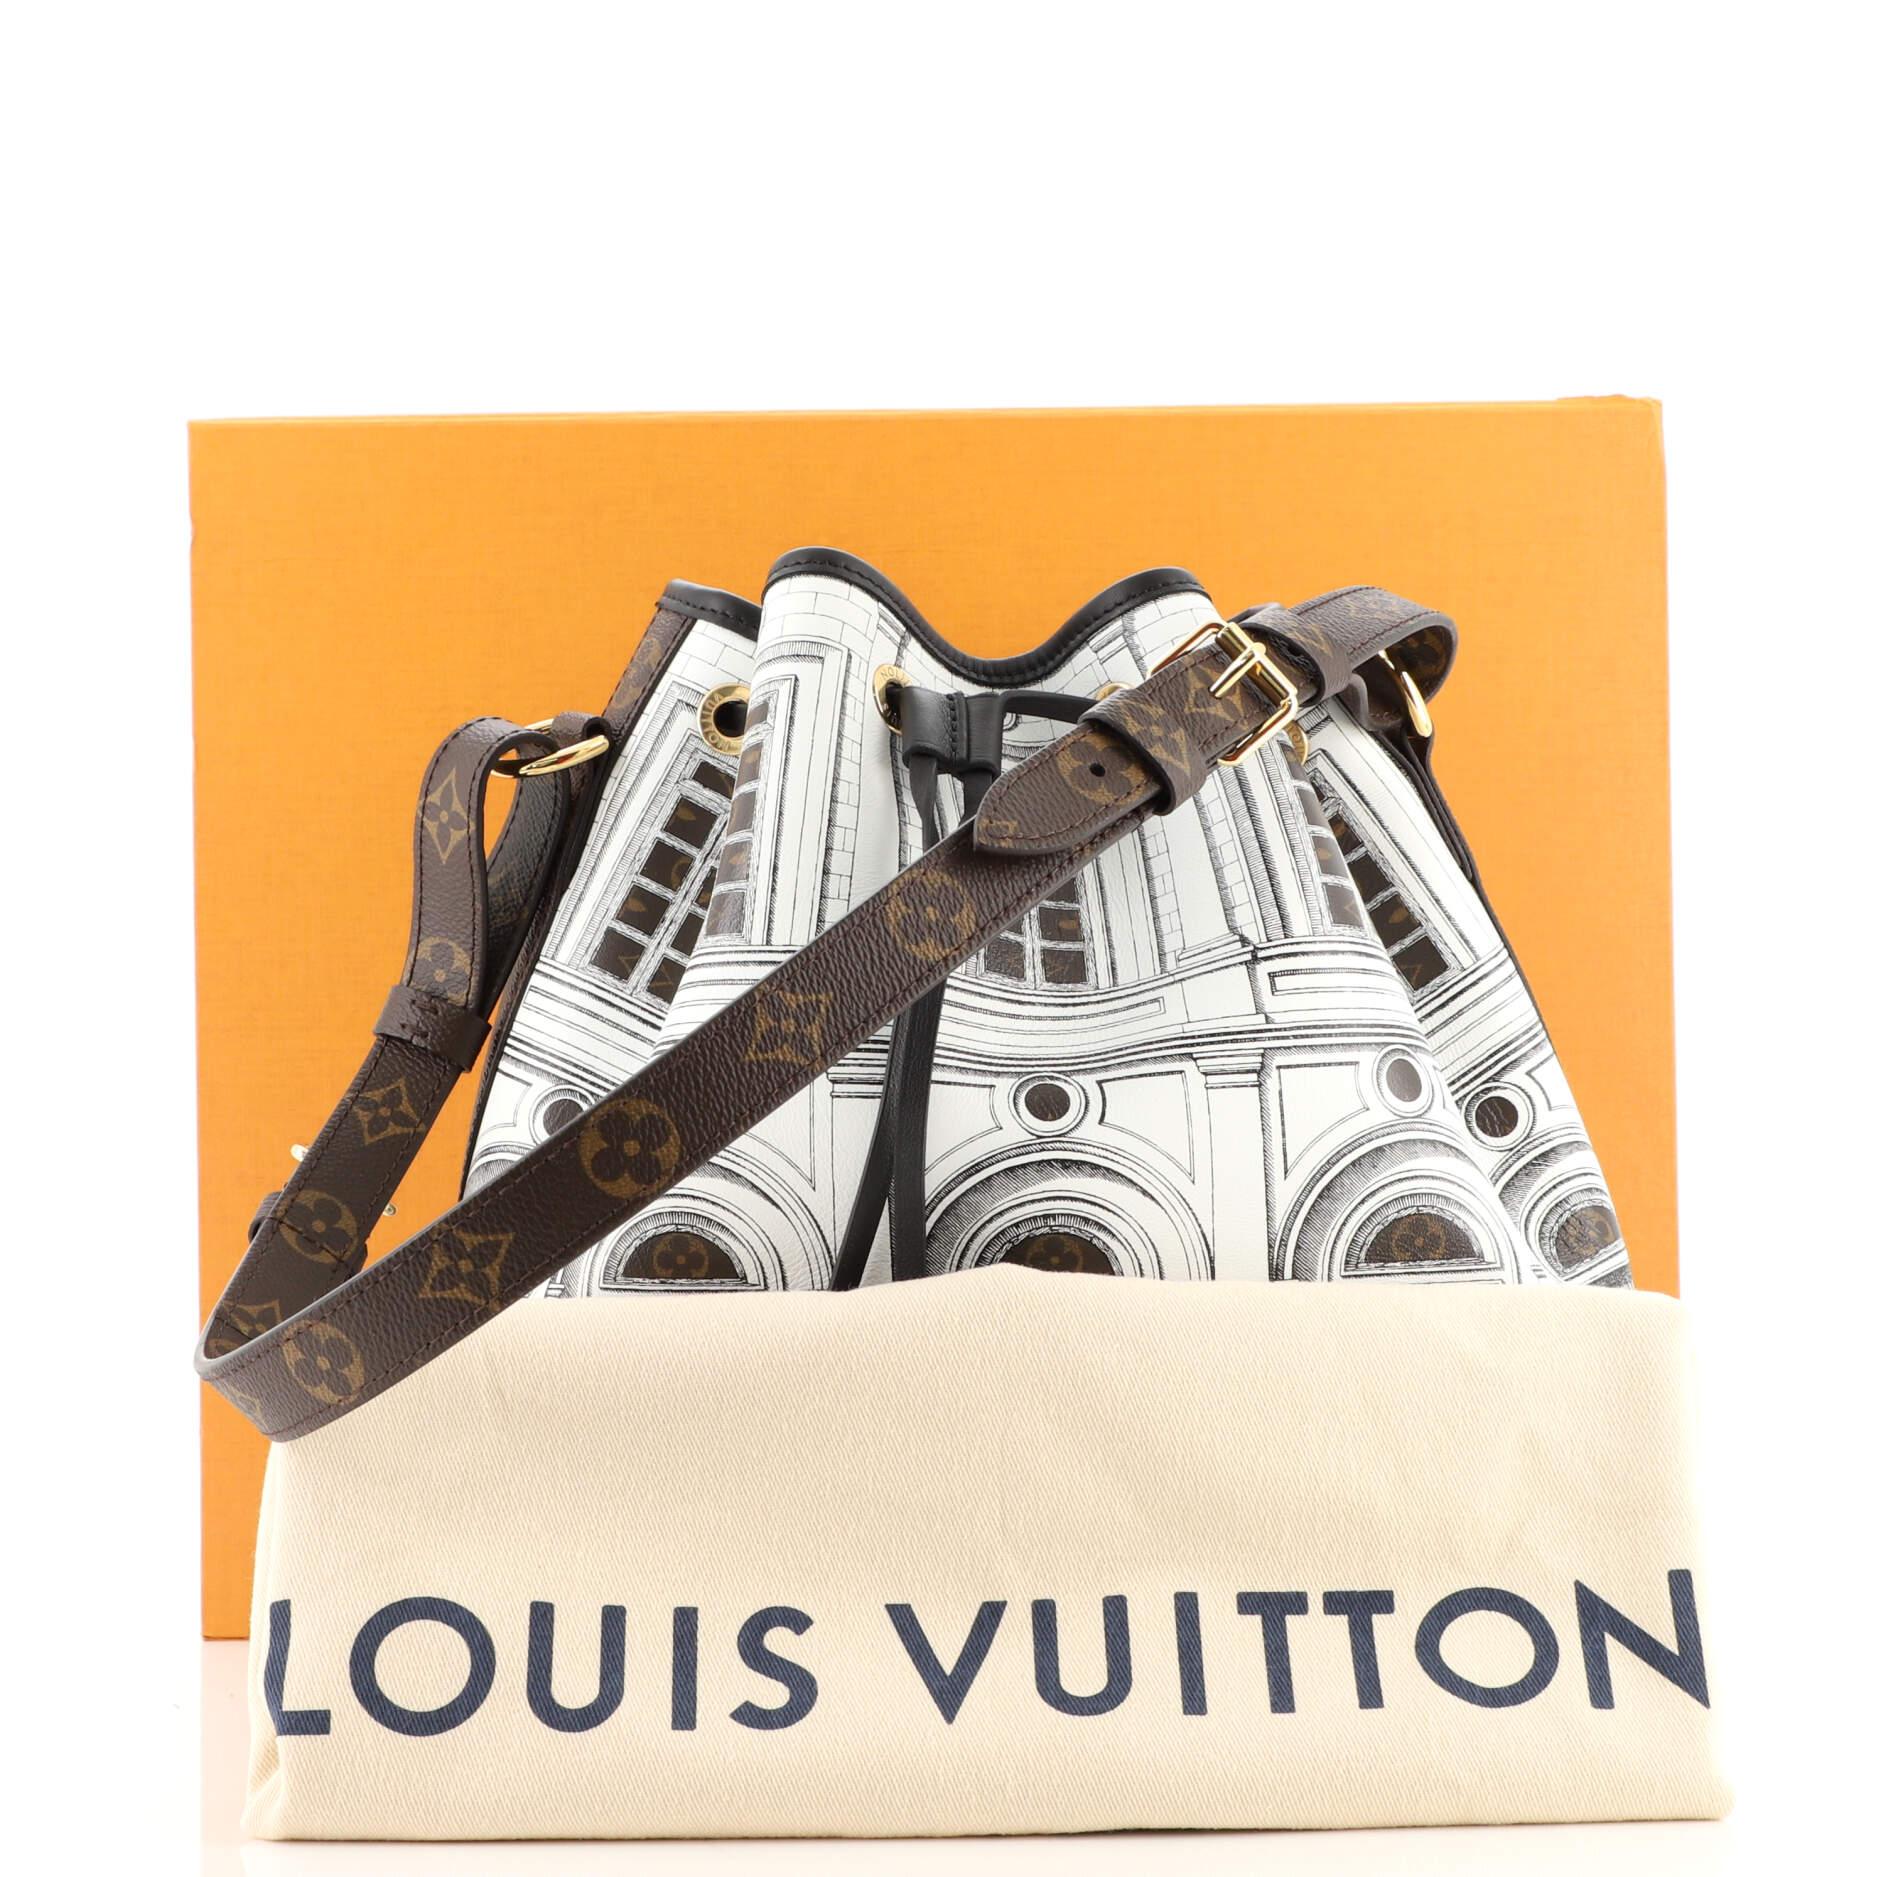 LOUIS VUITTON FORNASETTI 2021 Architettura LV monogram print cotton tshirt  XS